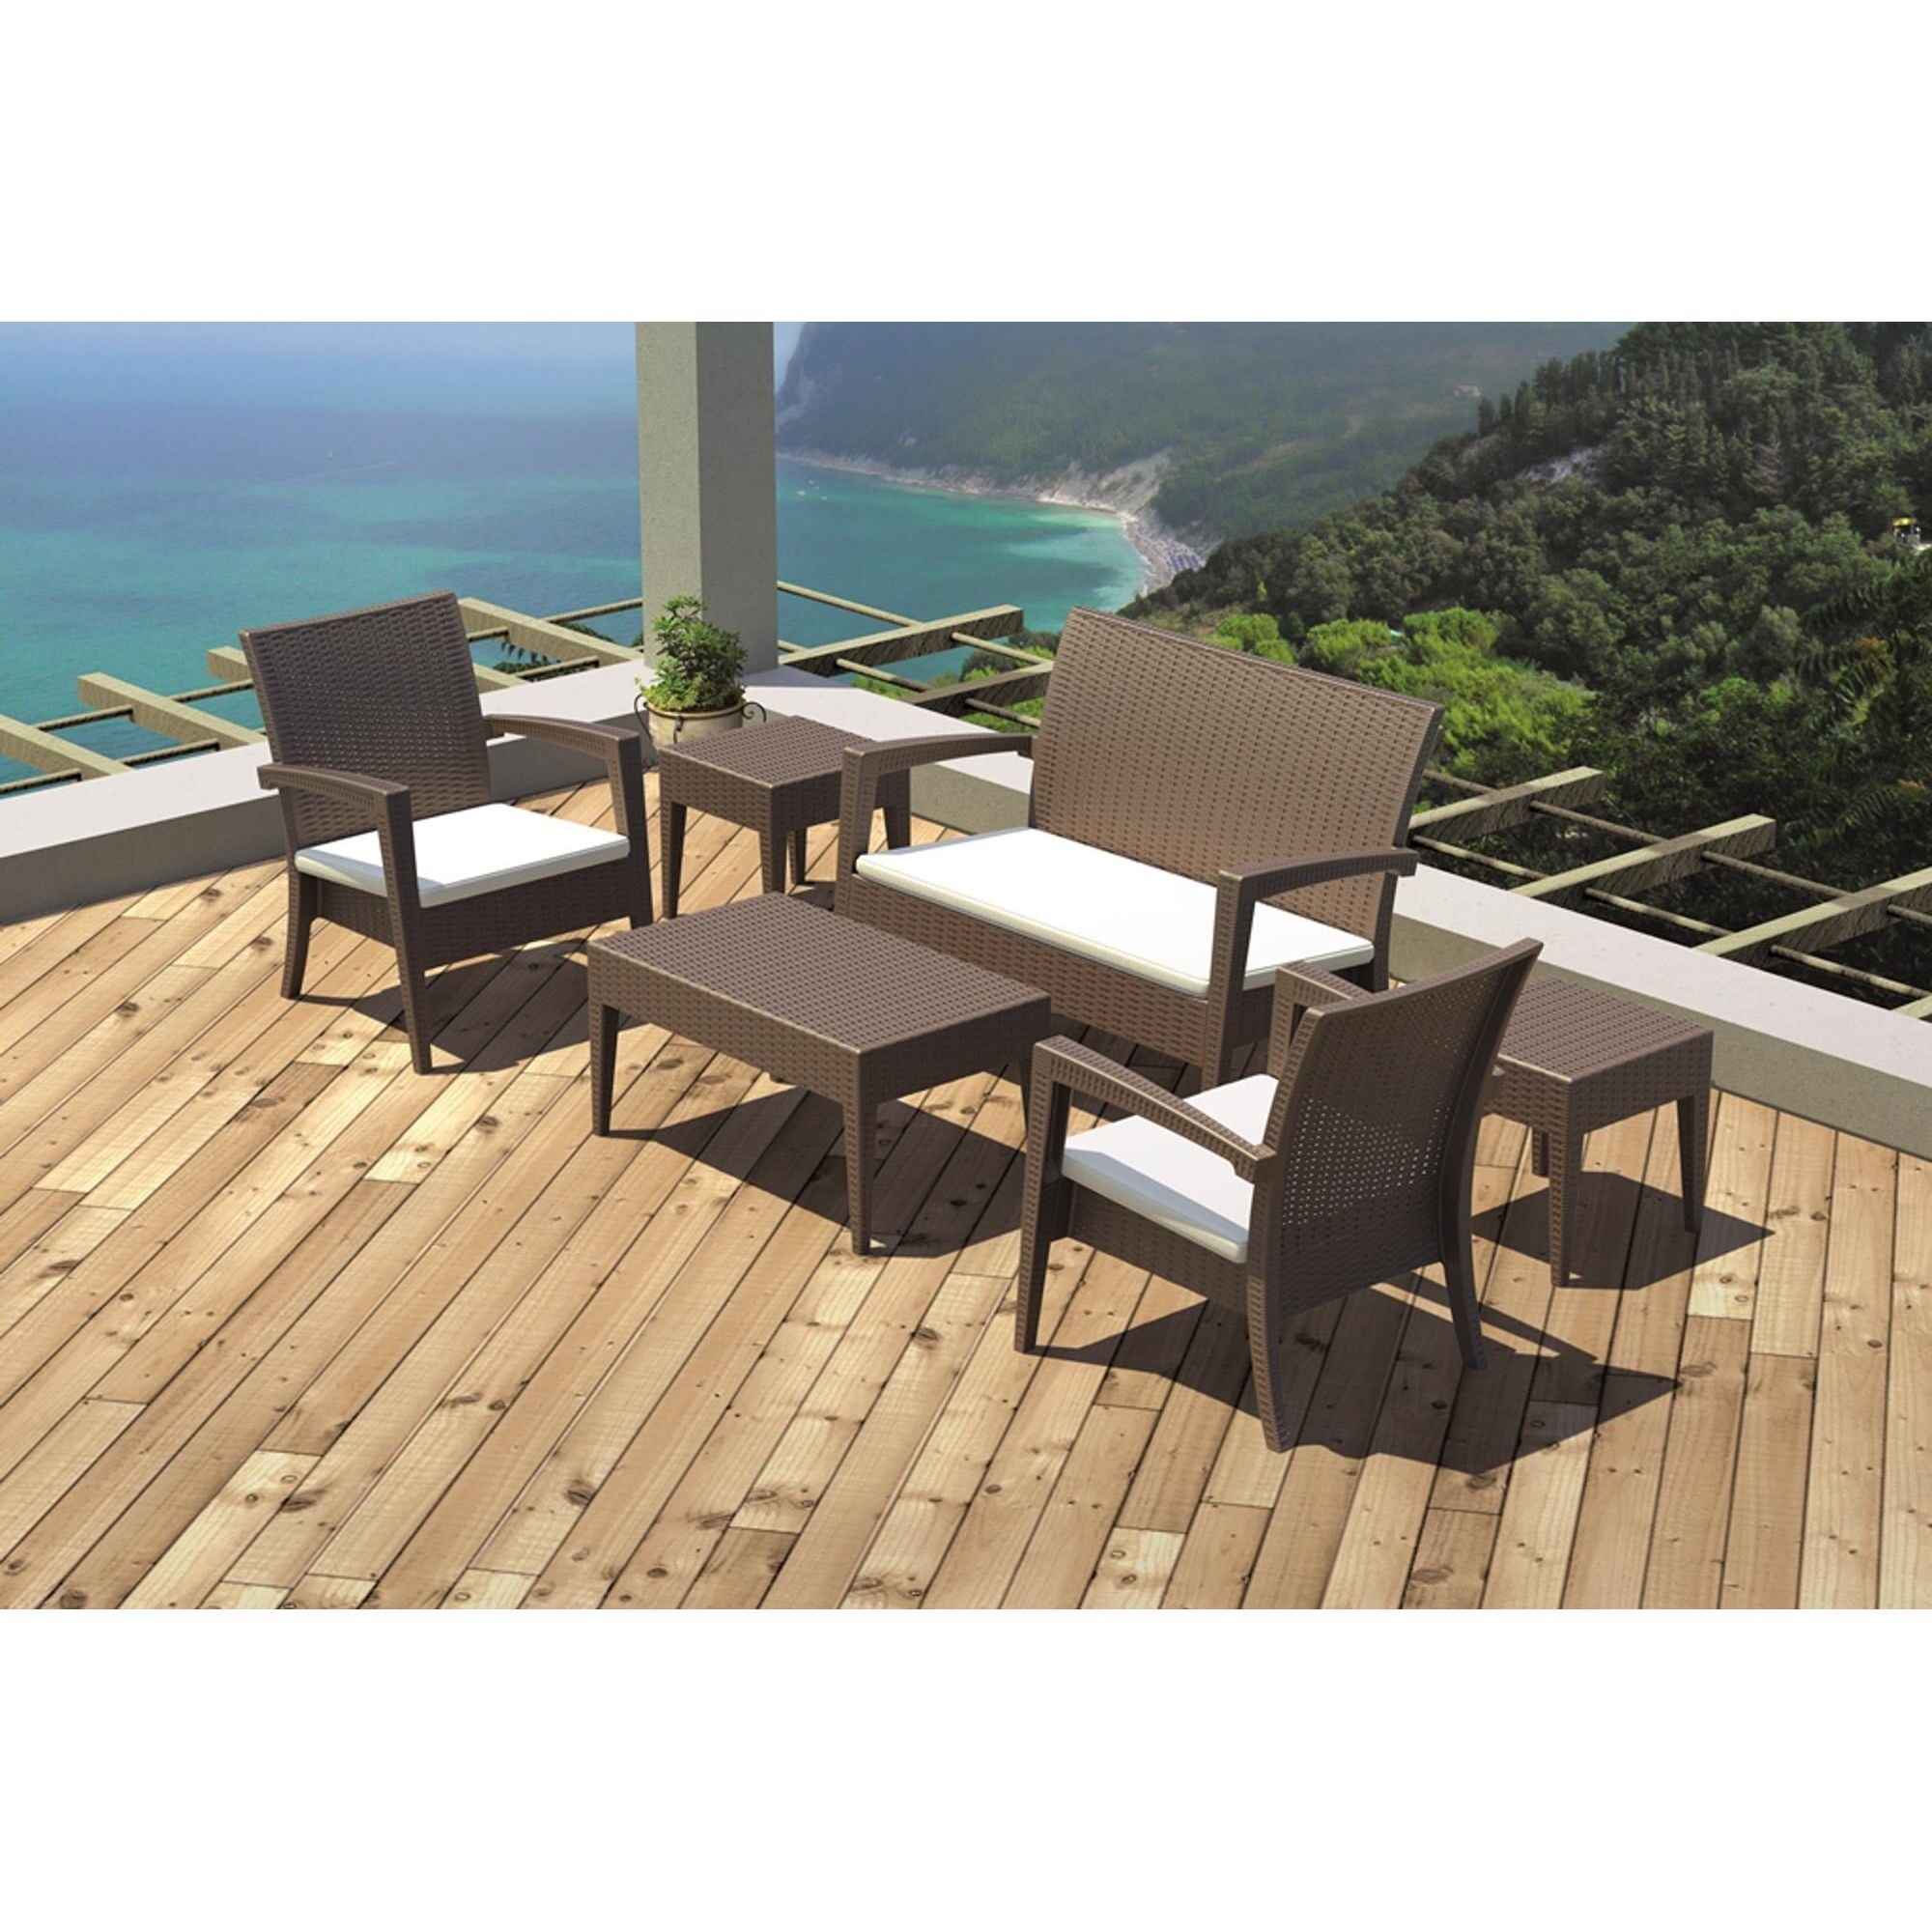 Garbar ipanema side table outdoor 45x45 white